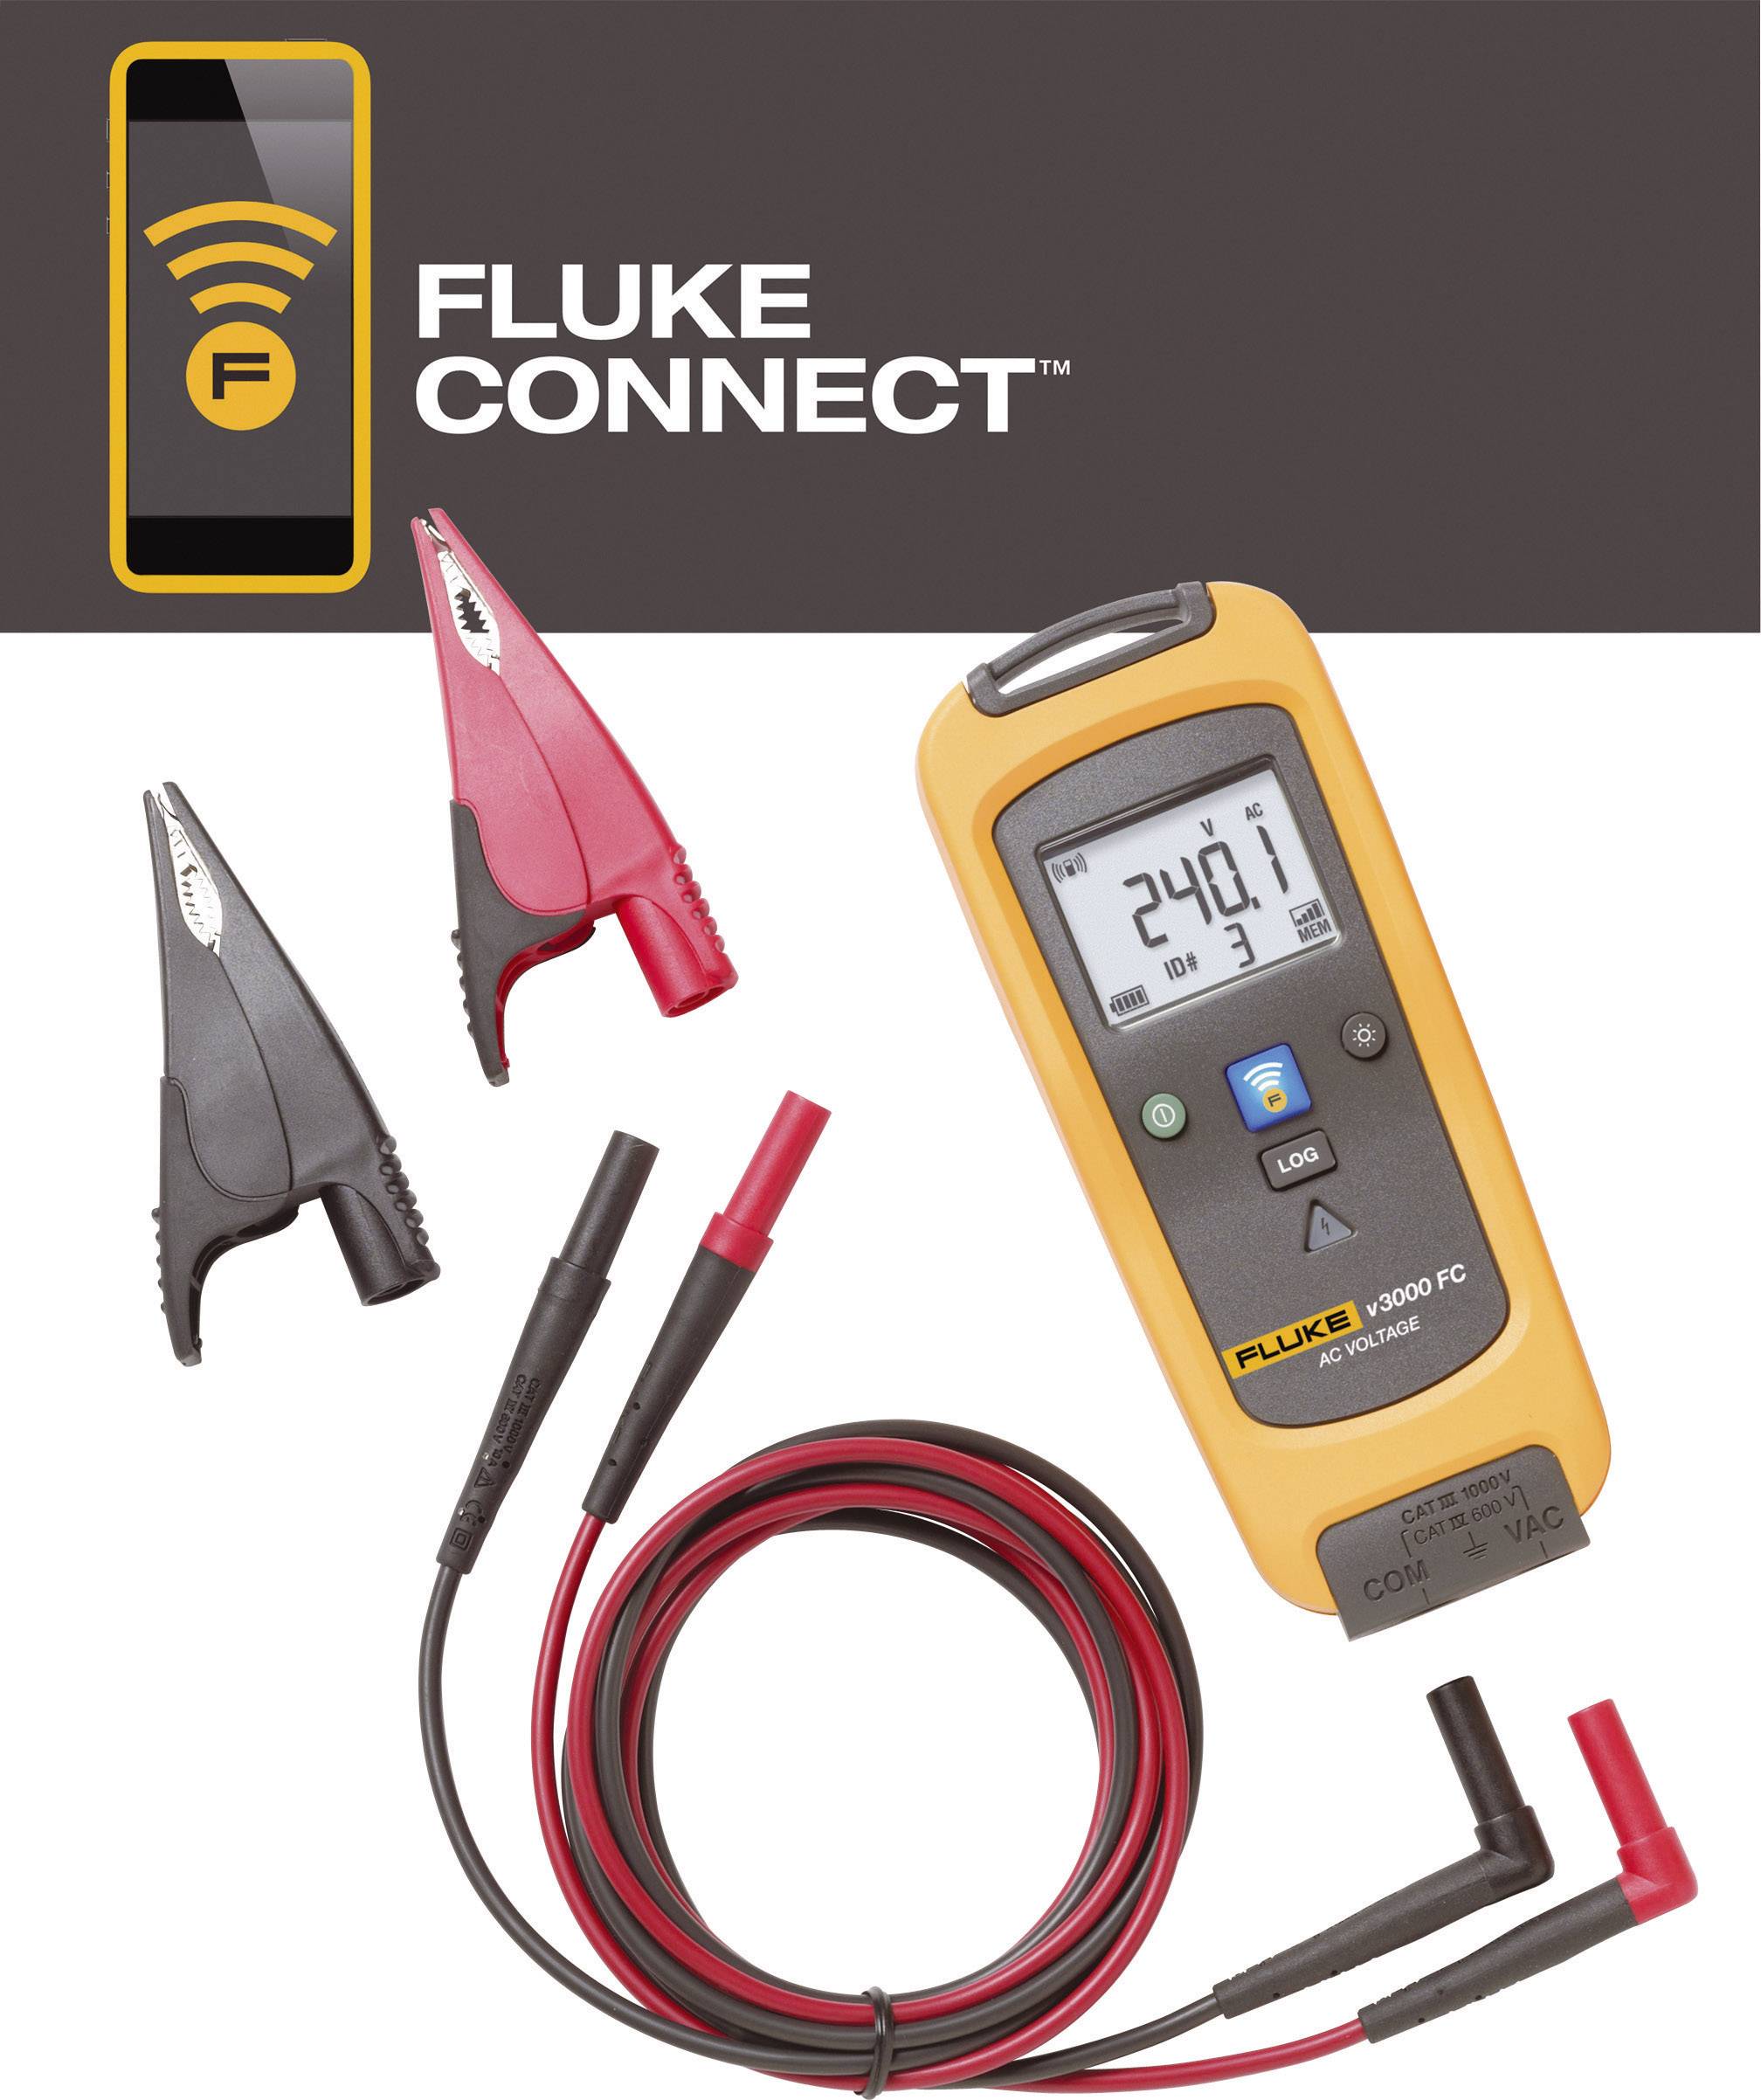 FLUKE Hand-Multimeter digital Fluke FLK-V3000 FC Kalibriert nach: Werksstandard Datenlogger CAT III